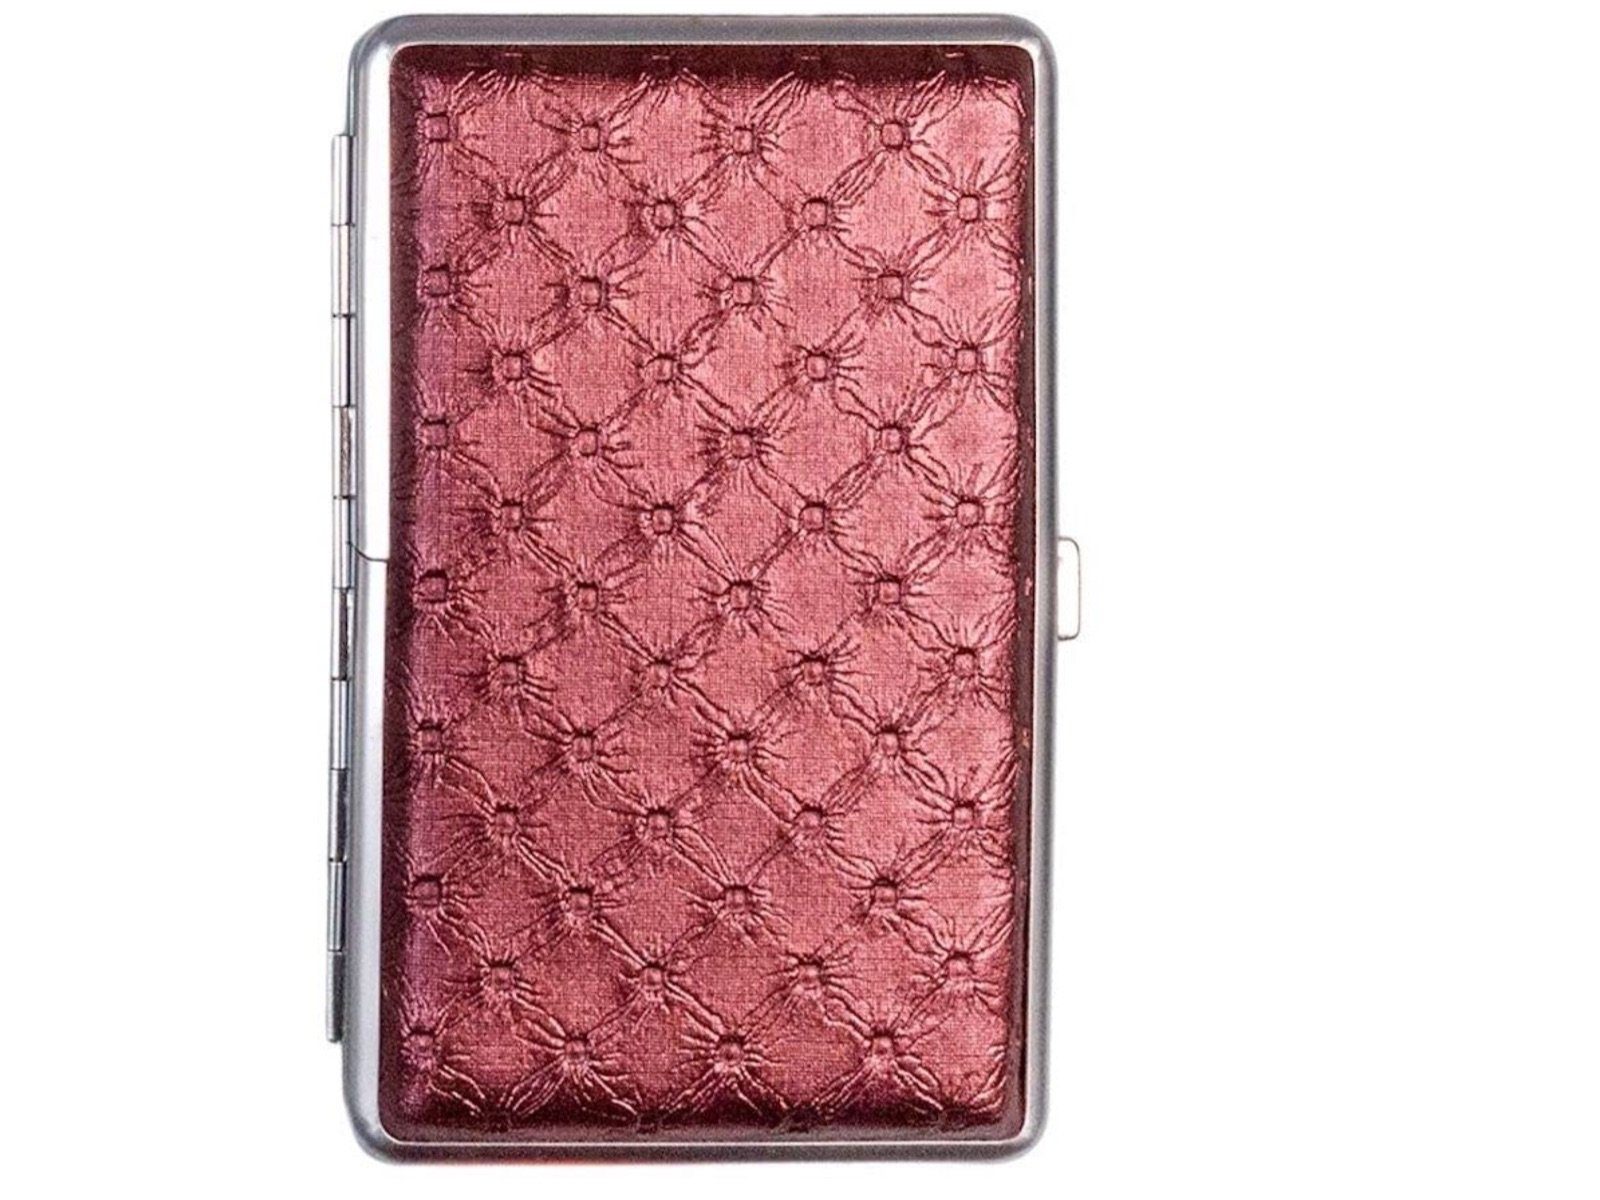 Rosa Zigaretten Etui Box Zigarettenetui Leder Design im Trend Farbton Pink 